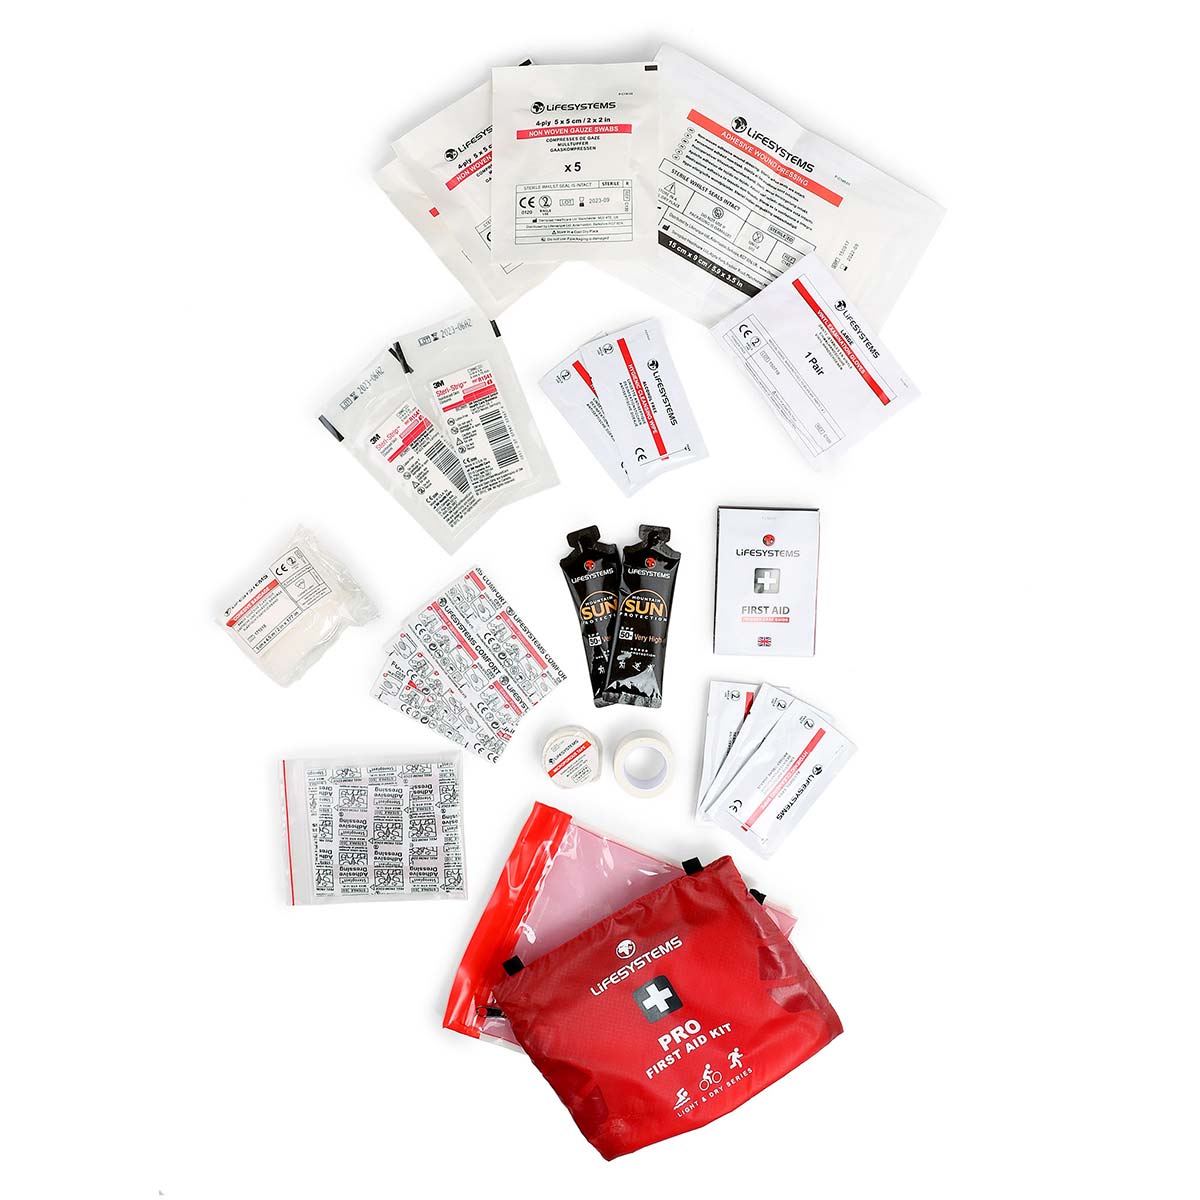 Apteczka LifeSystems Light & Dry Pro First Aid Kit